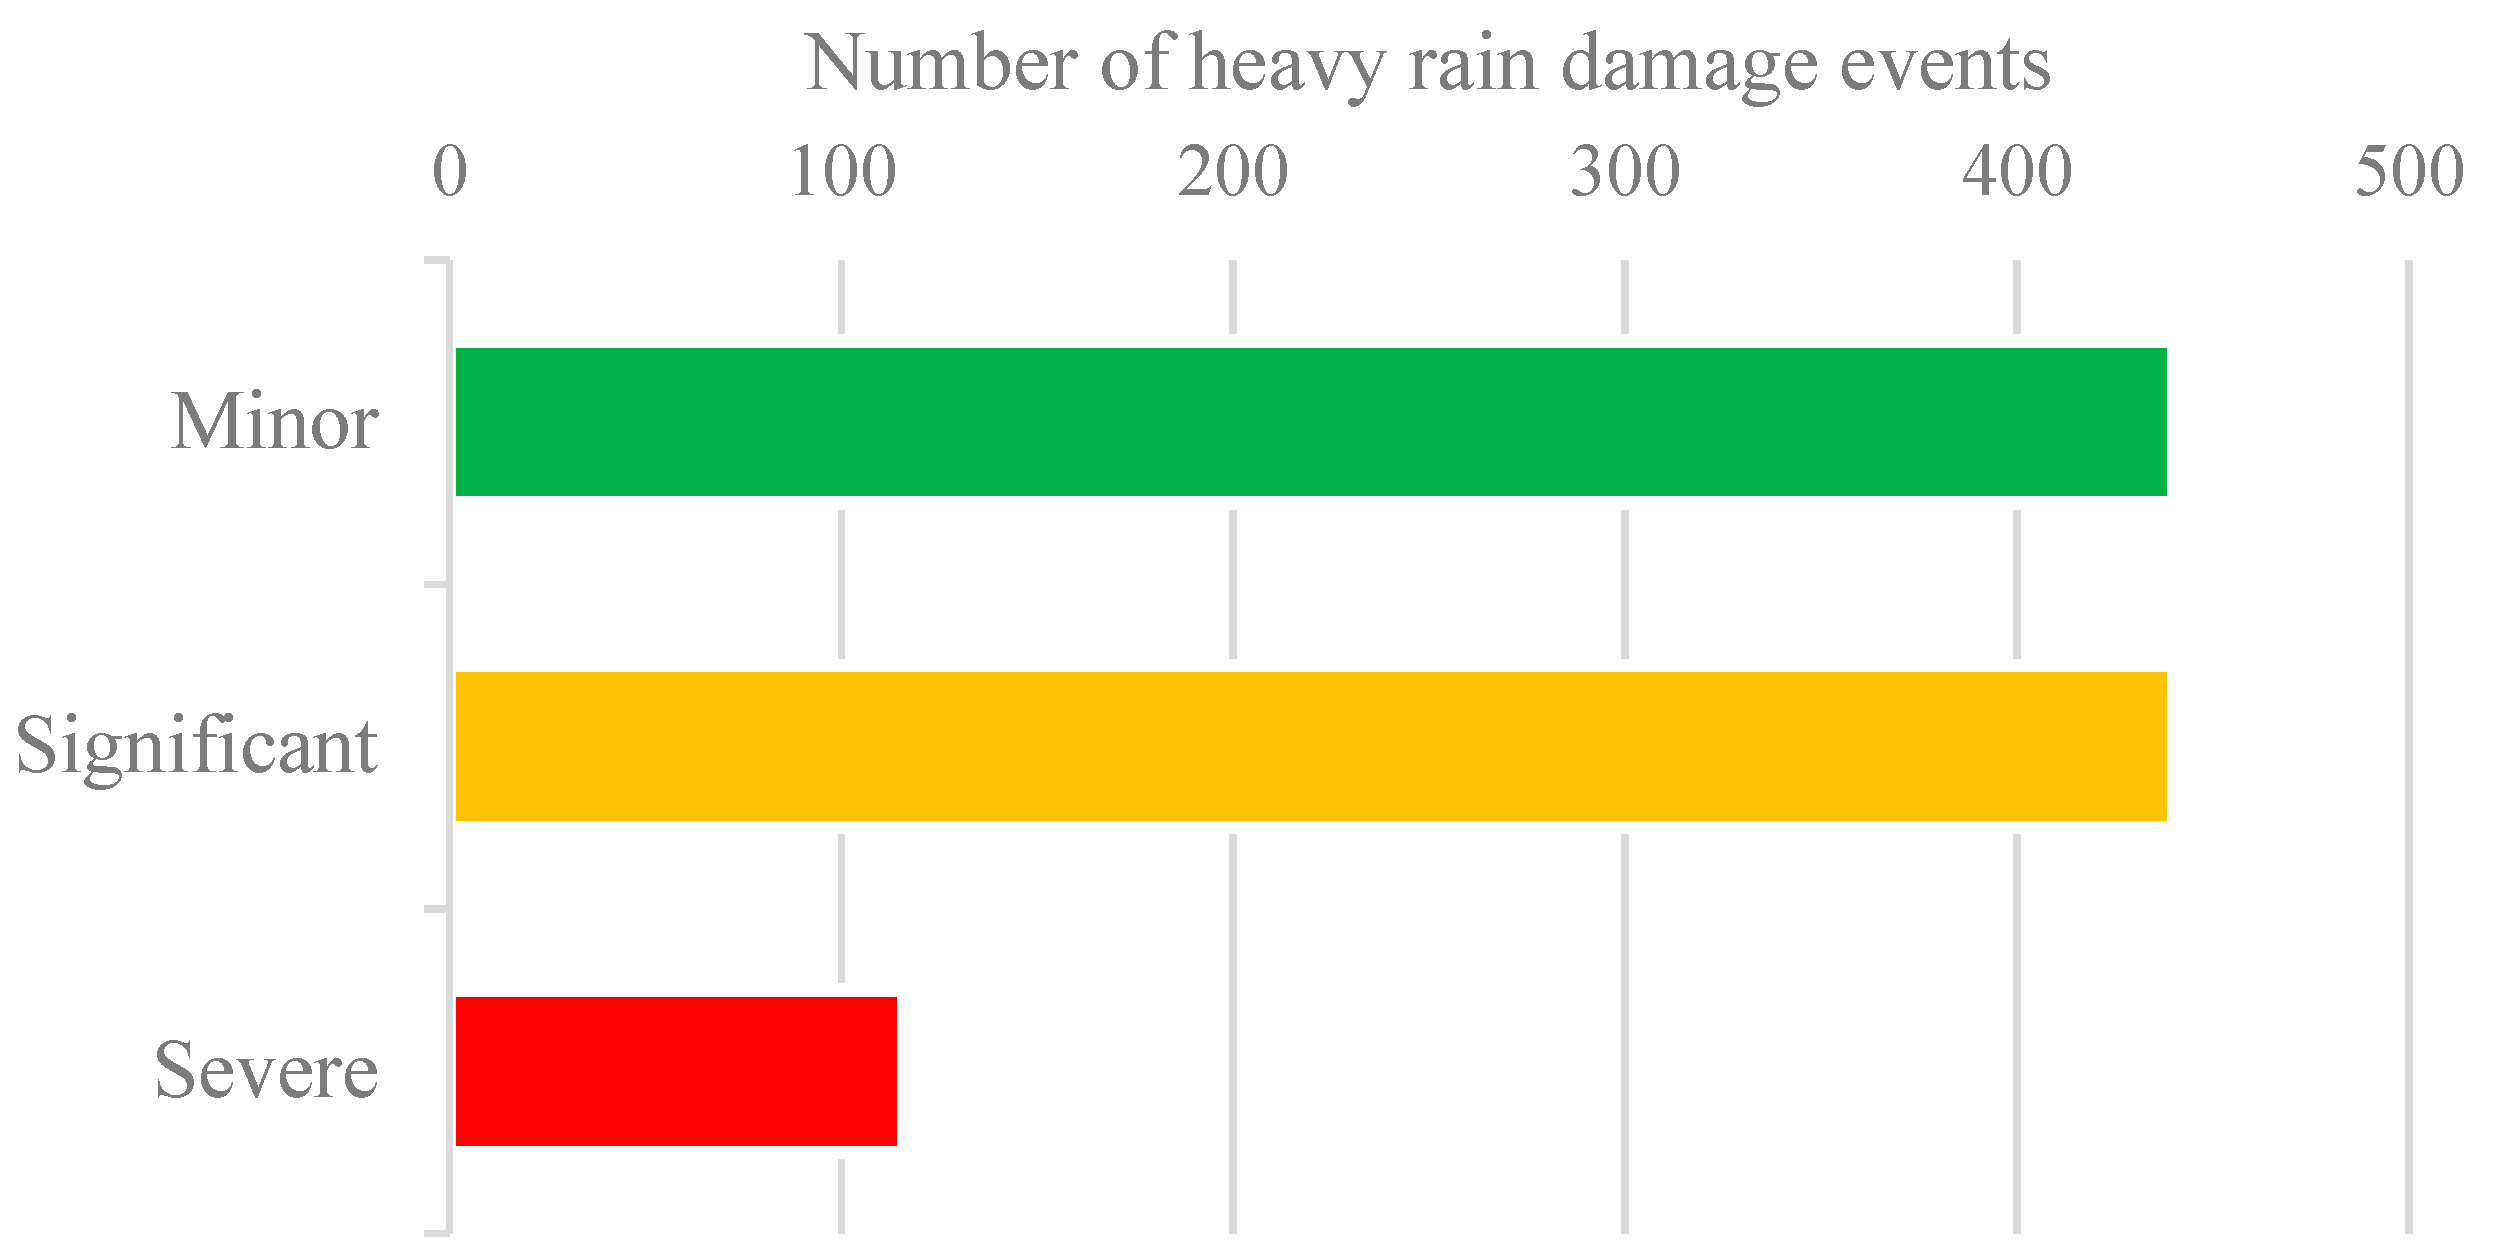 Water | Free Full-Text | Prediction of Heavy Rain Damage Using